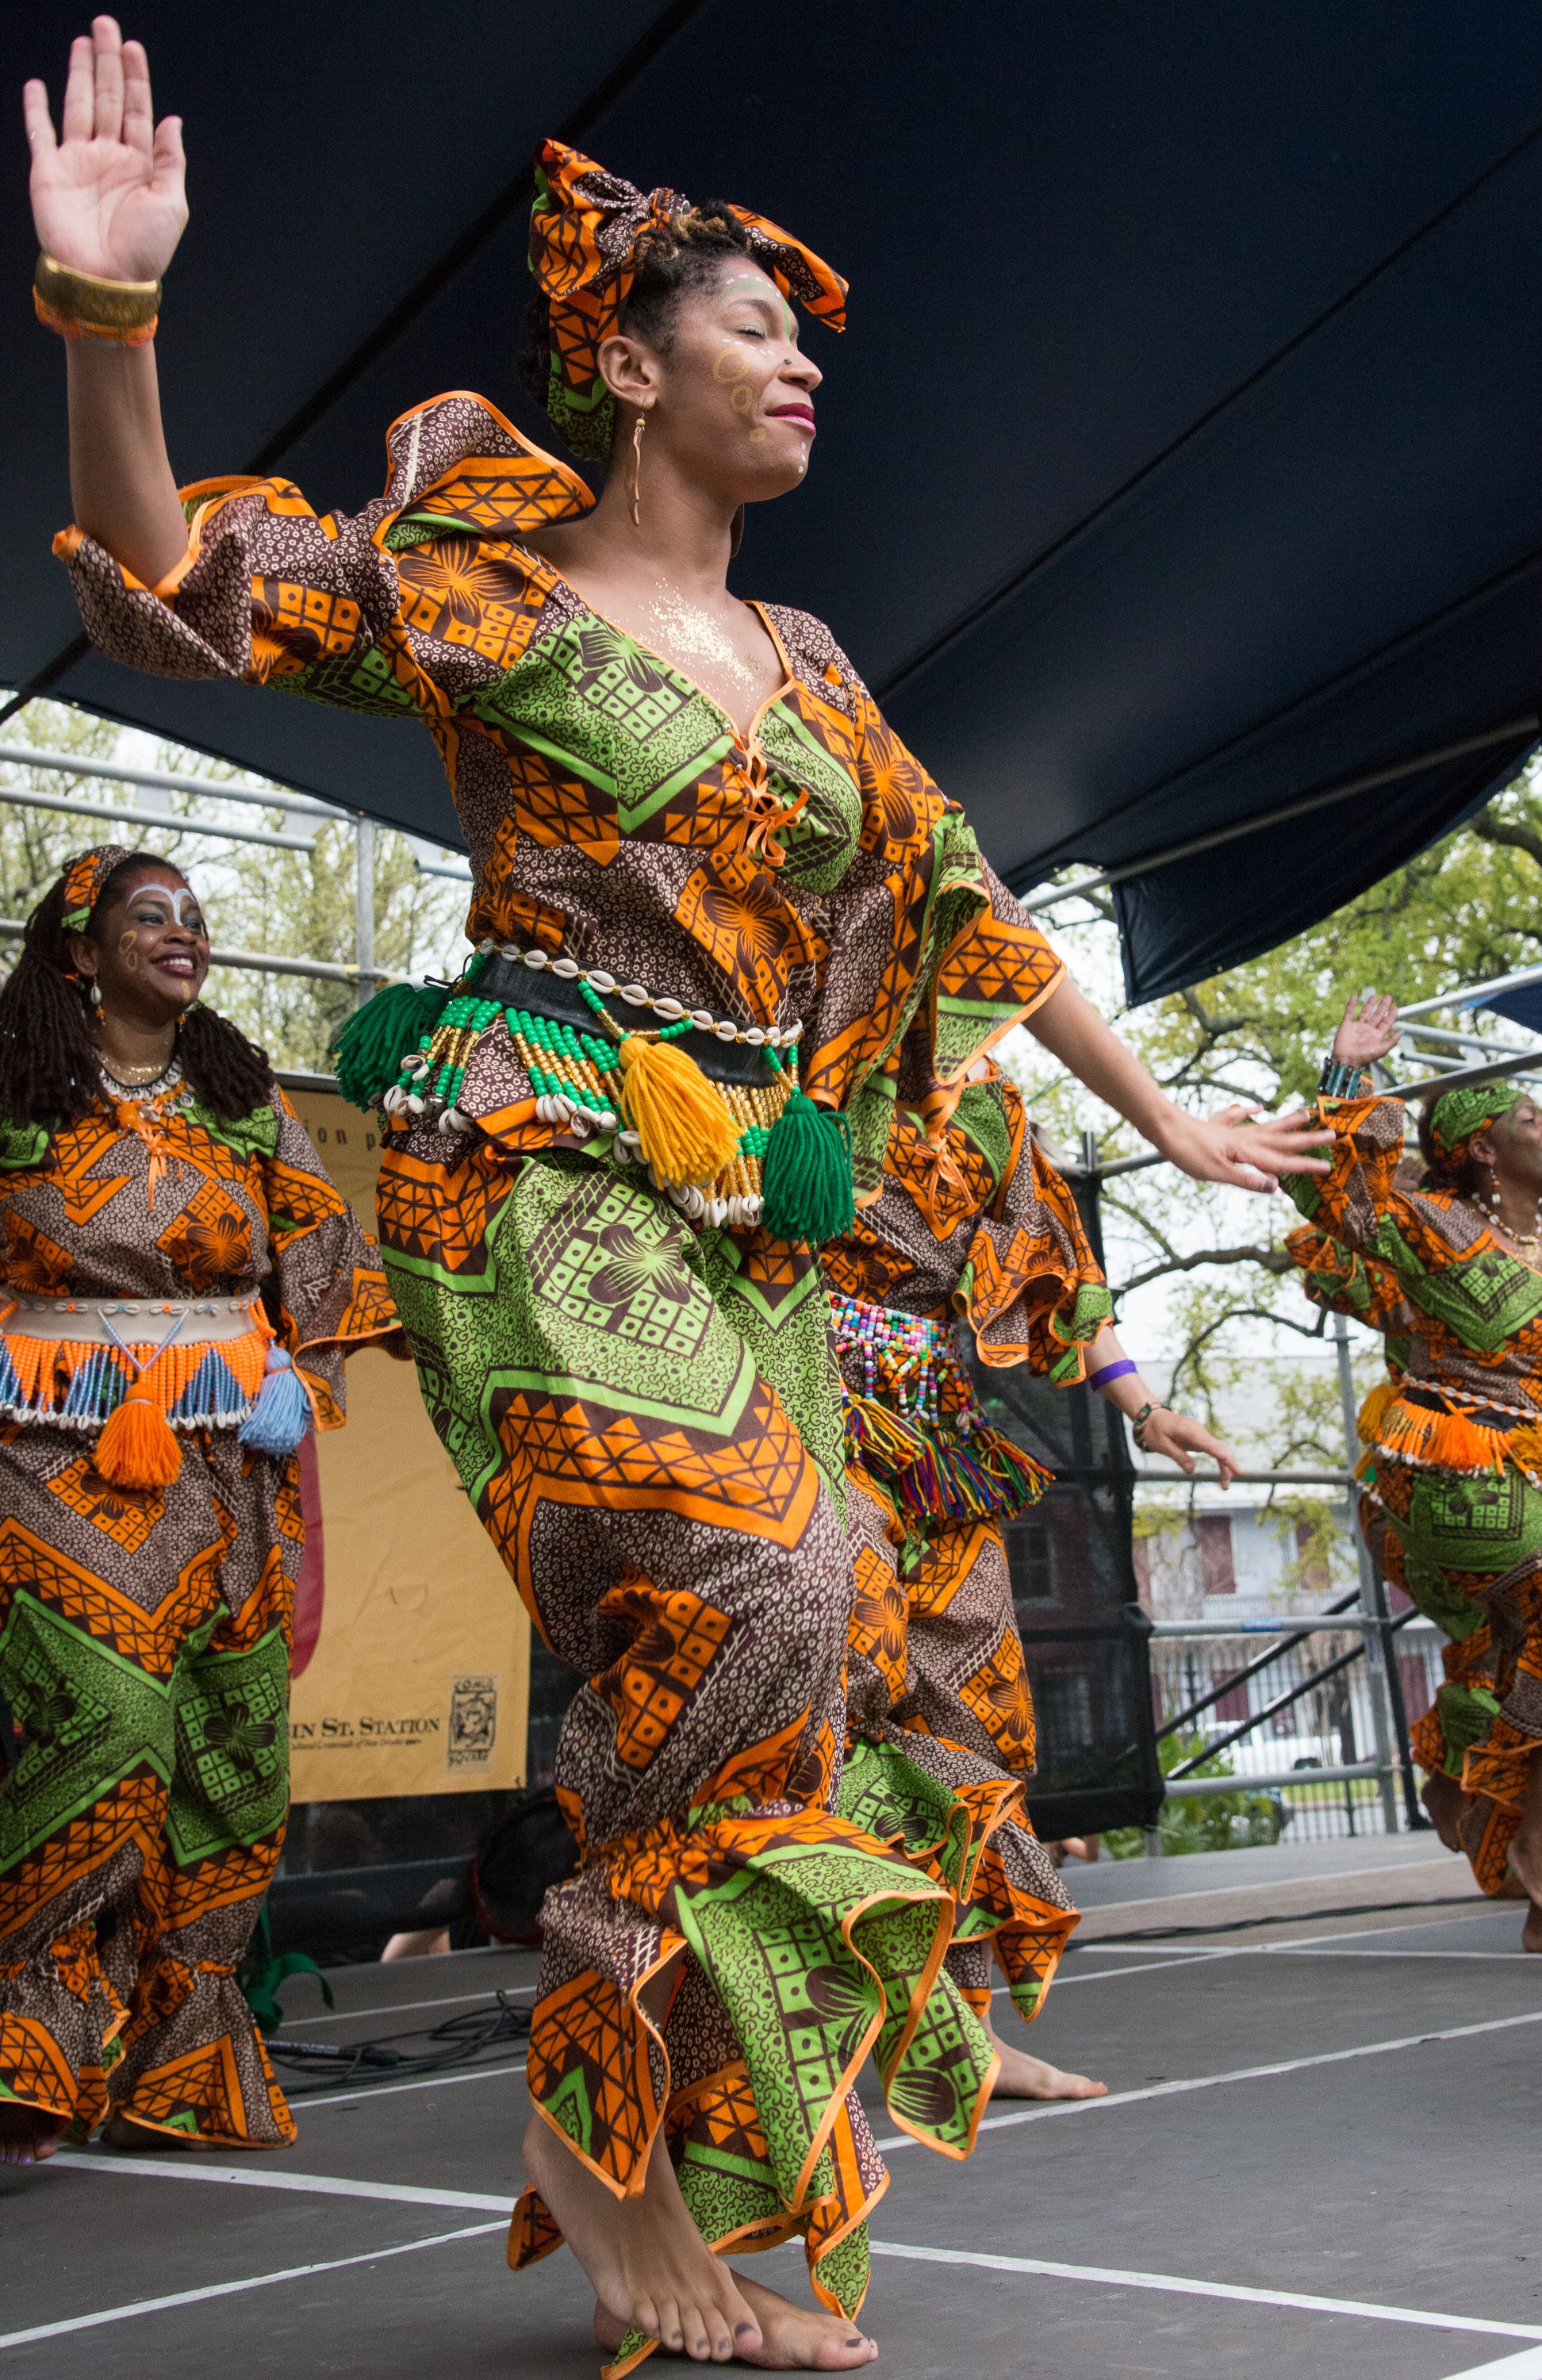 Congo Square New World Rhythms Festival